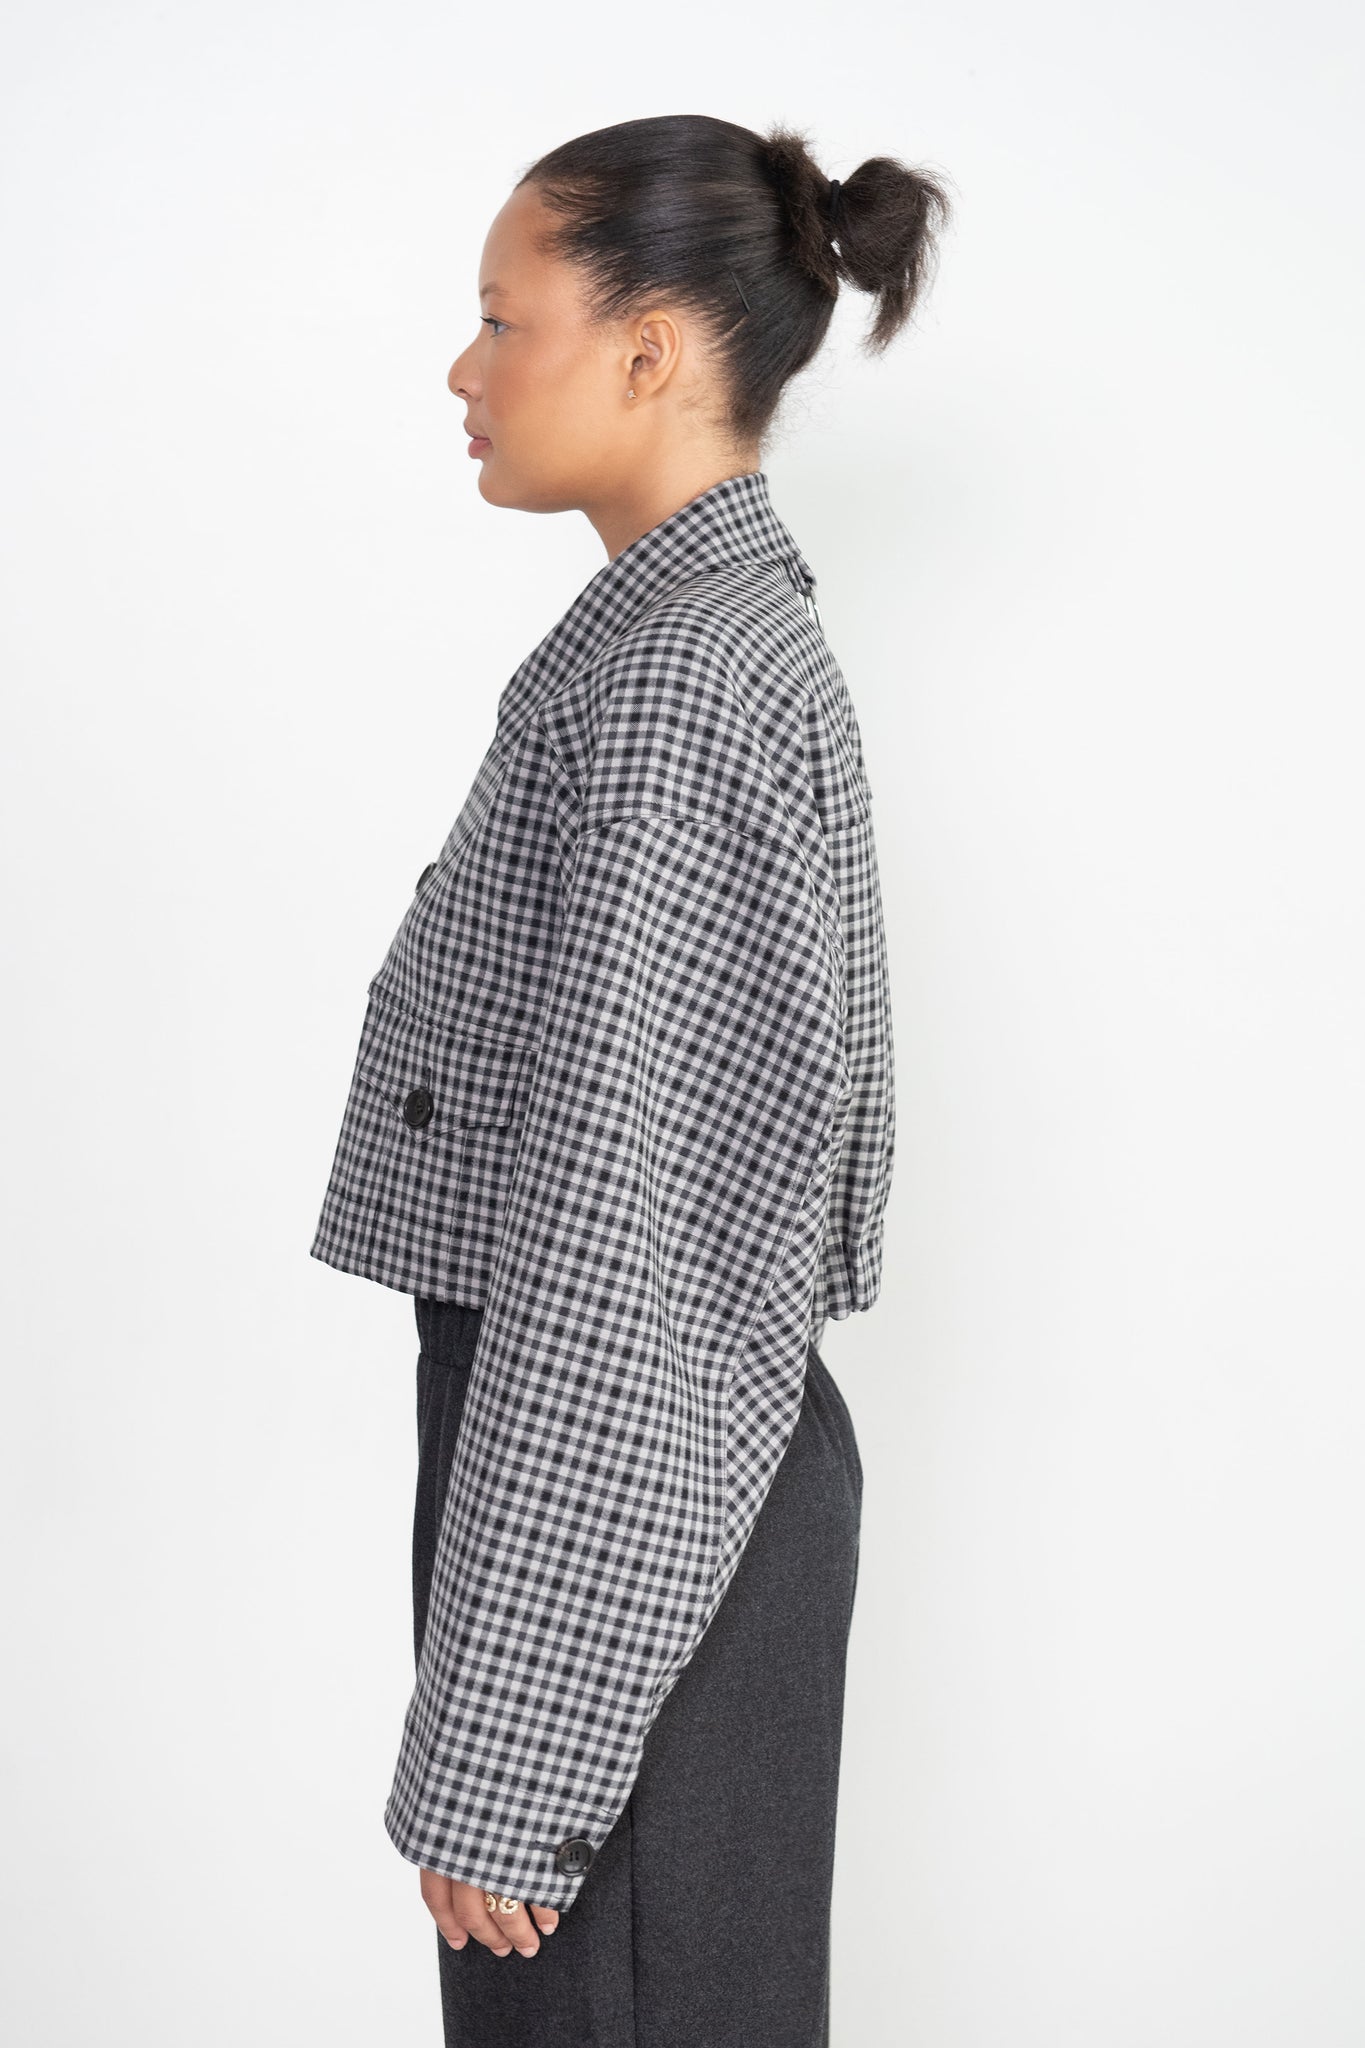 TIBI - Double Faced Menswear Check Cropped Jean Jacket, Black & Grey Multi